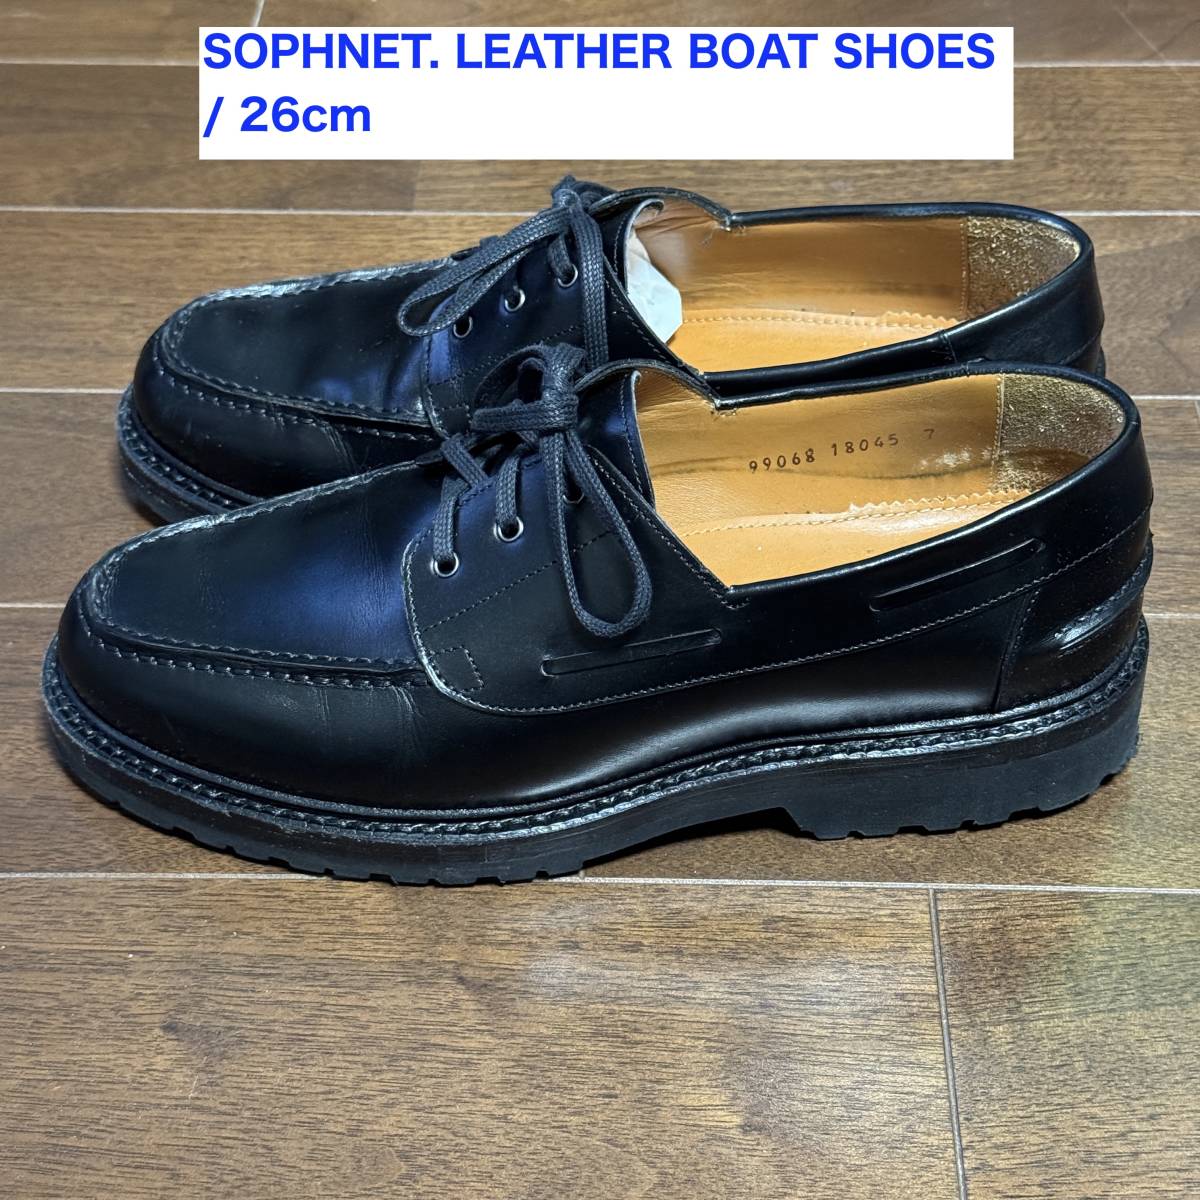 SOPHNET. 2023 SS / LEATHER BOAT SHOES / 26cm / レザー ボートシューズ 革靴 vibram ビブラム  ソフネット